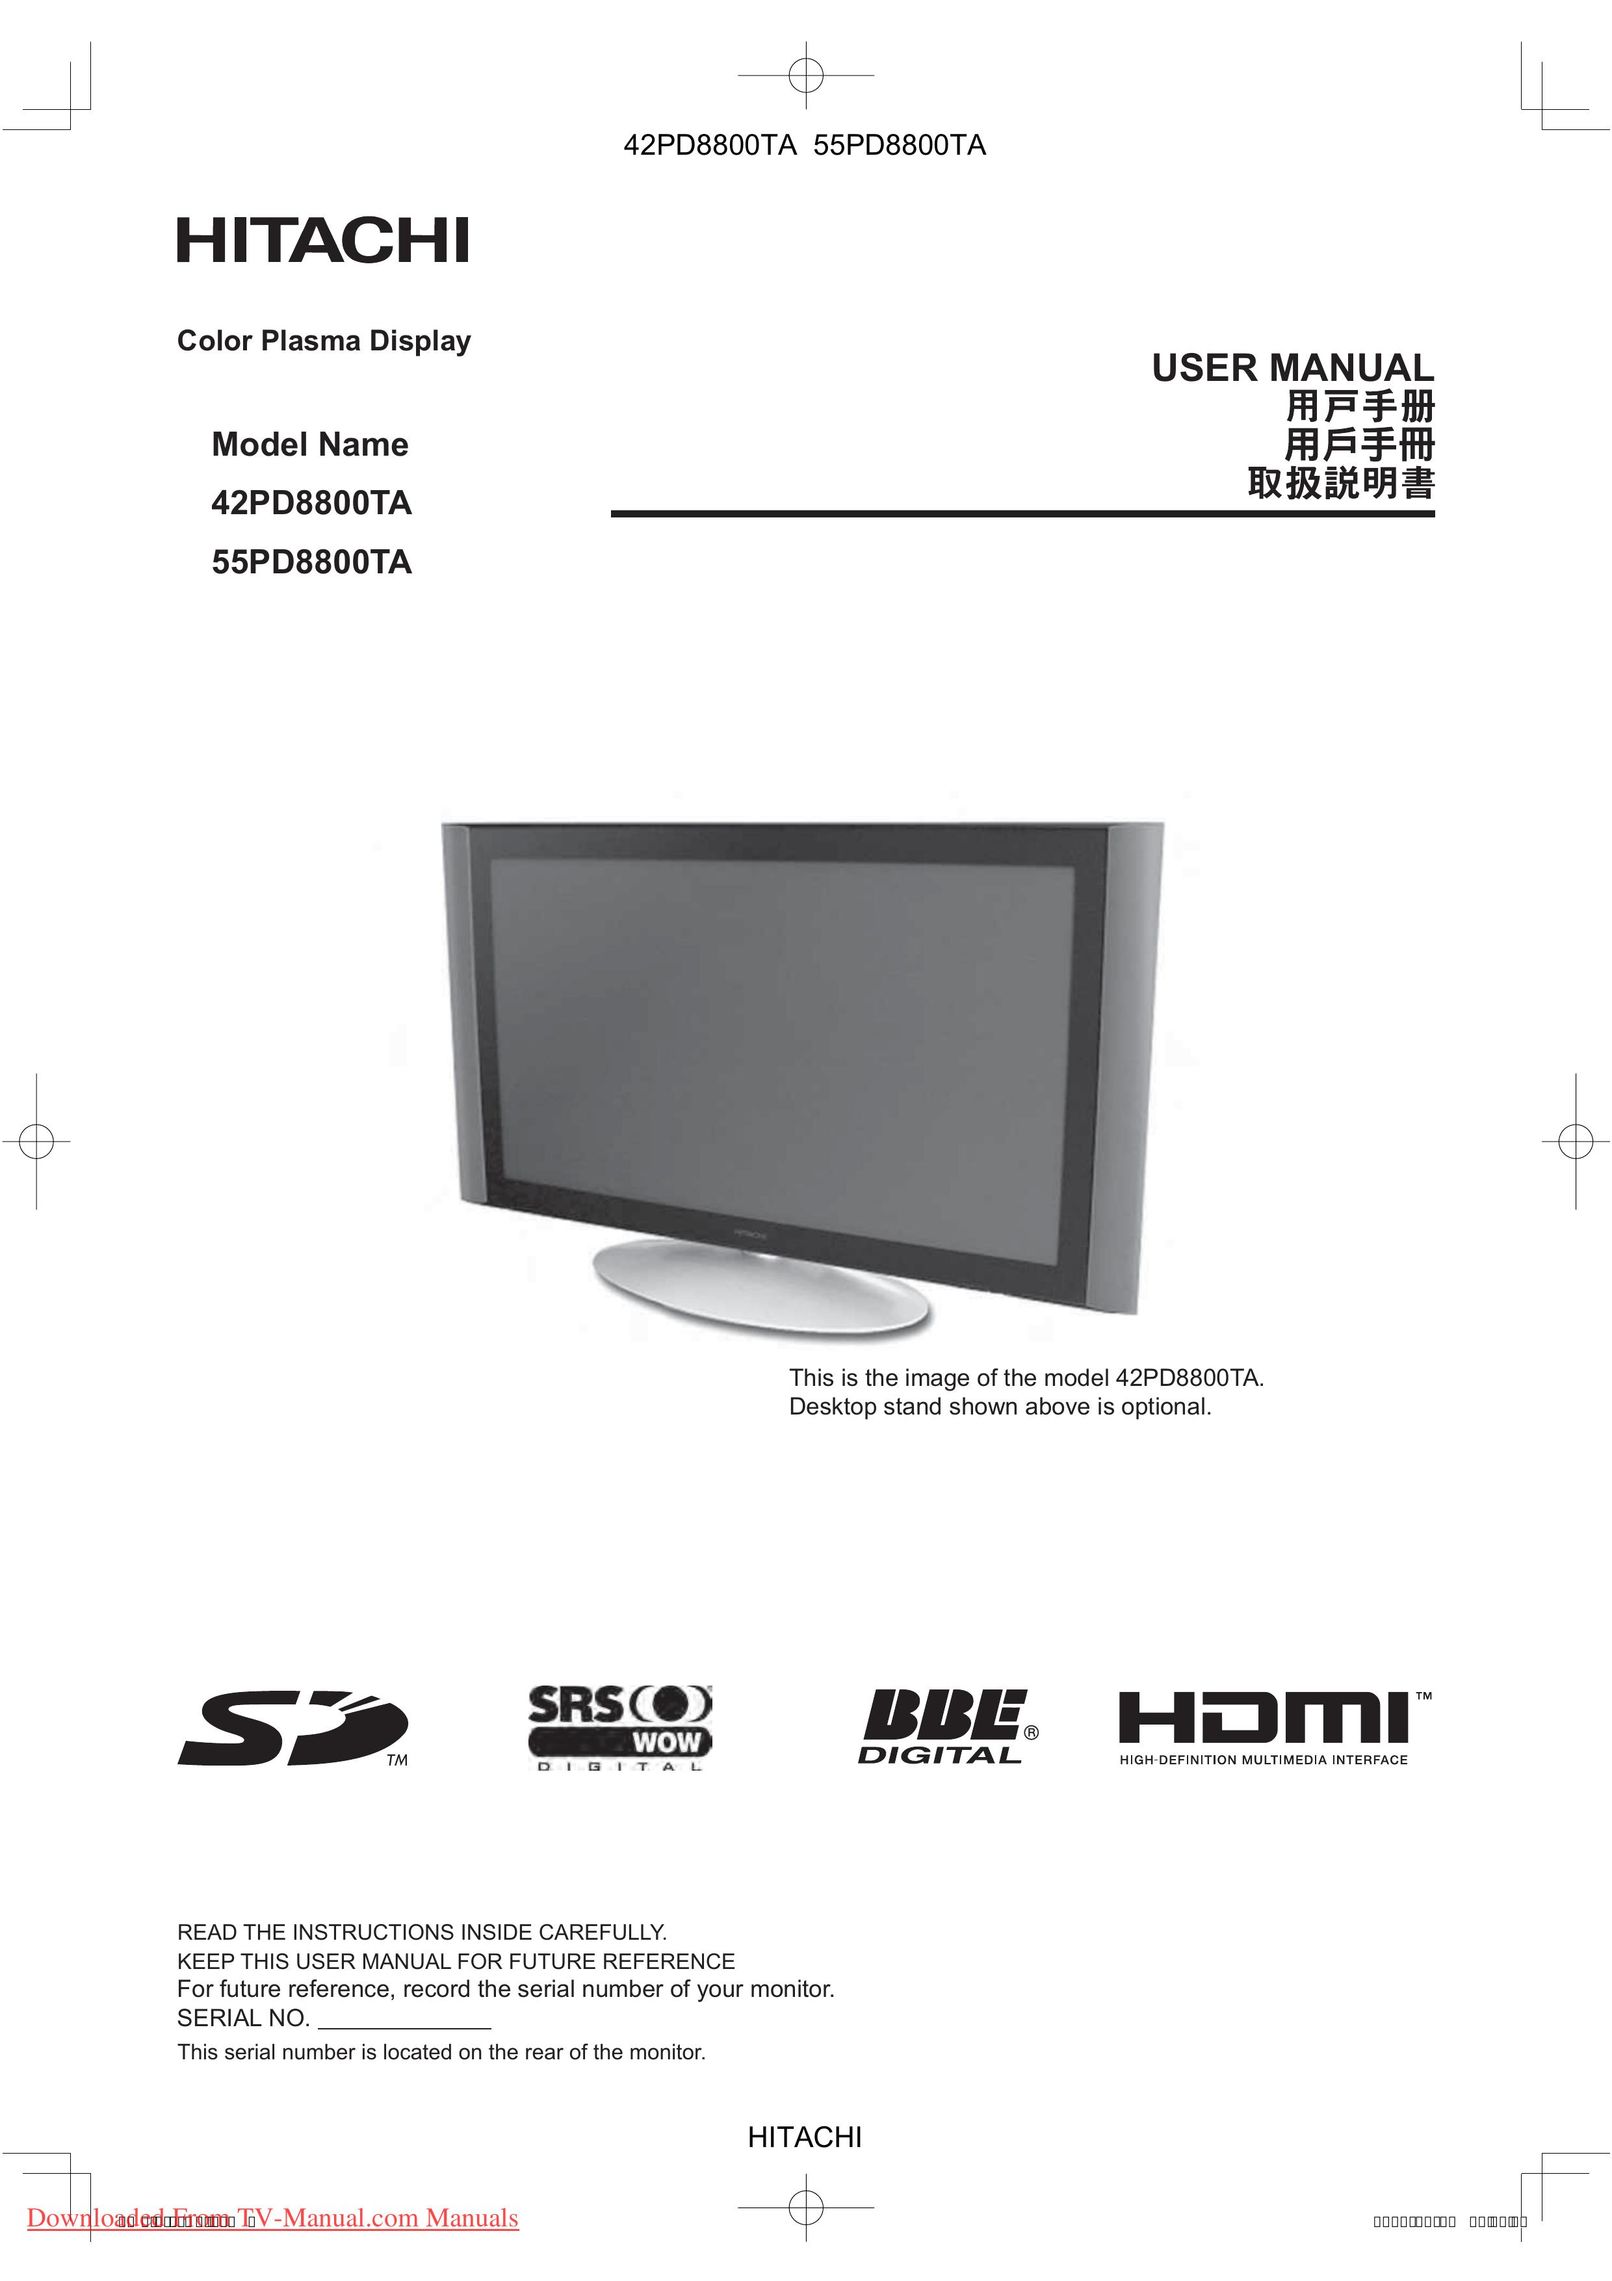 Hitachi 55PD8800TA TV Antenna User Manual